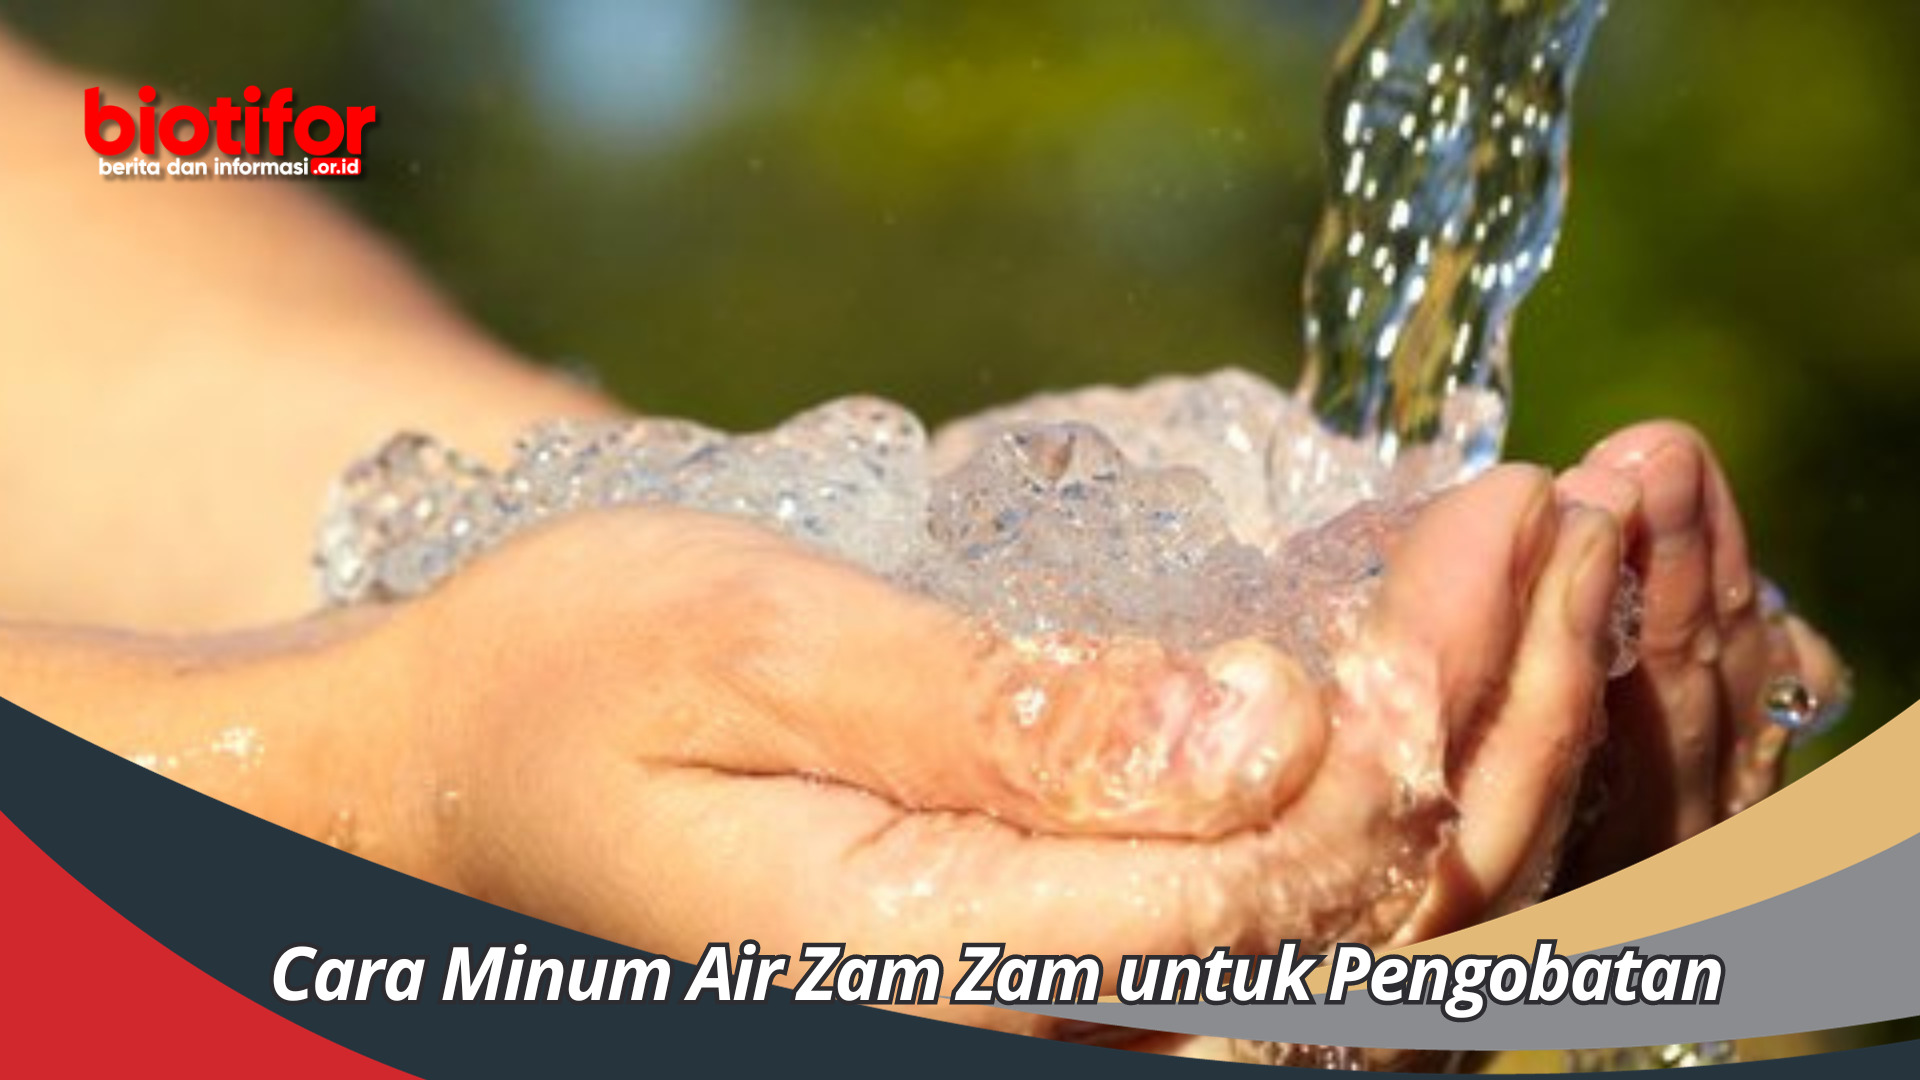 Cara Minum Air Zam Zam untuk Pengobatan